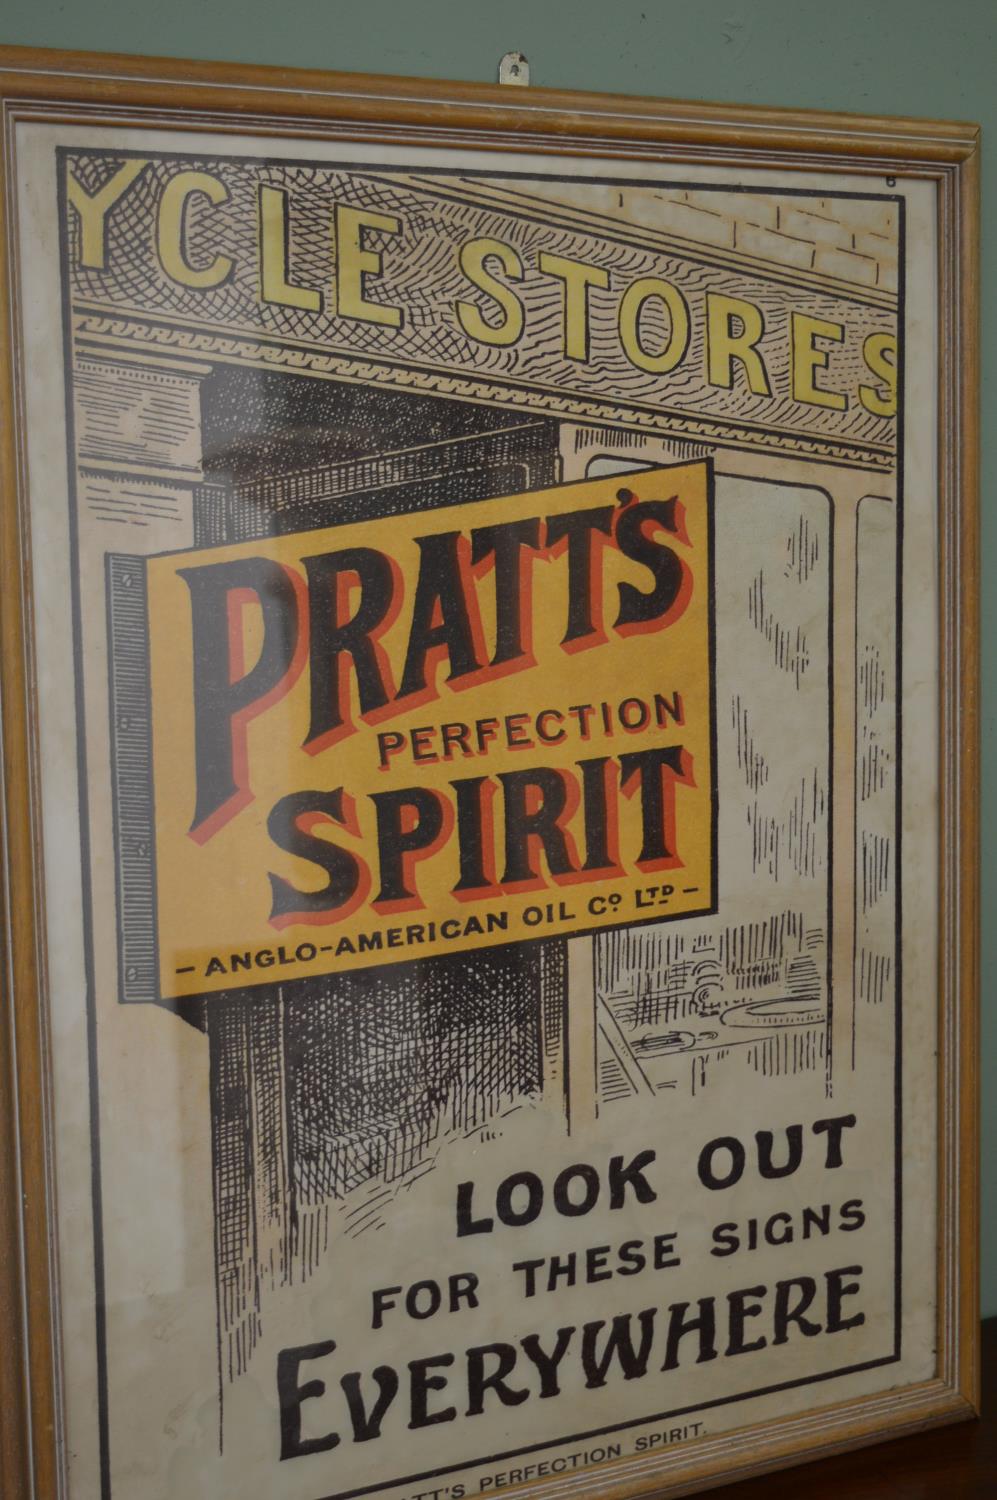 Pratt’s Perfection Spirit advertising print. - Image 2 of 2